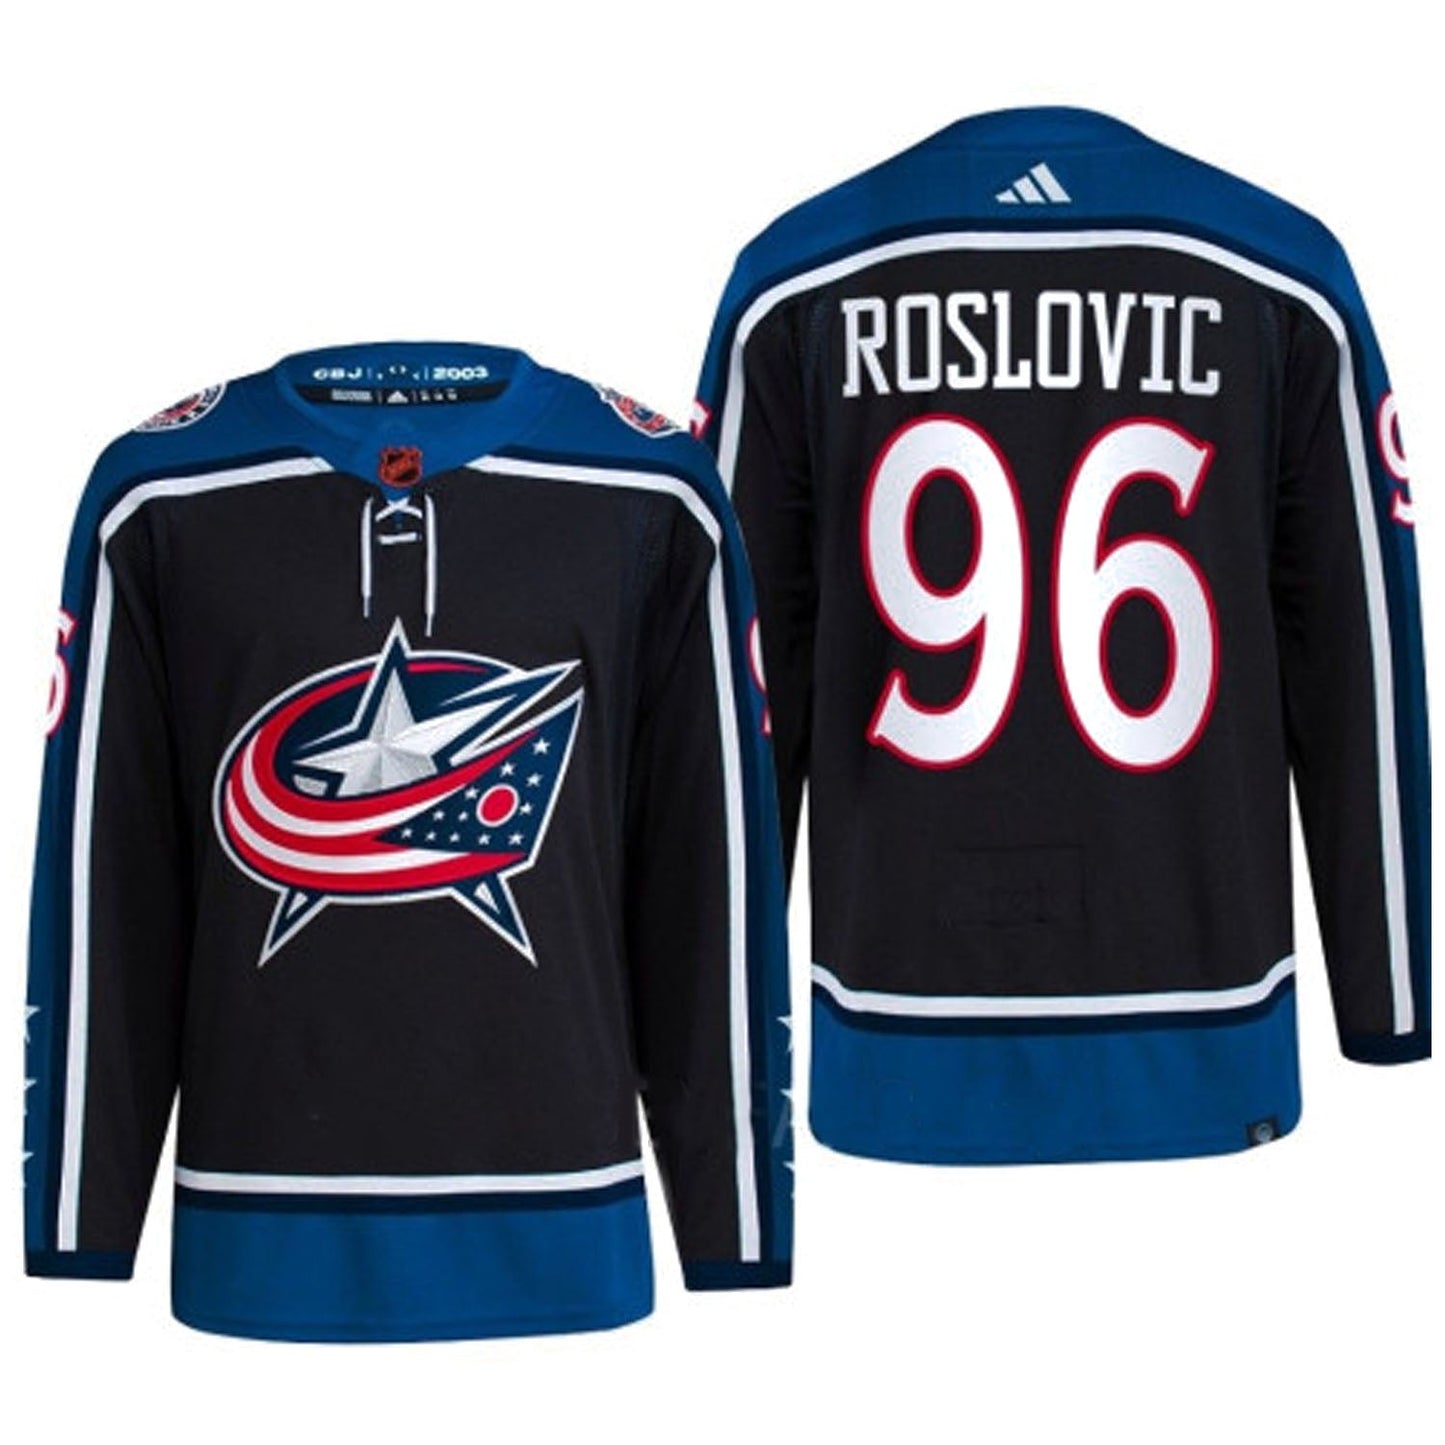 NHL Jack Roslovic Columbus Blue Jackets 96 Jersey